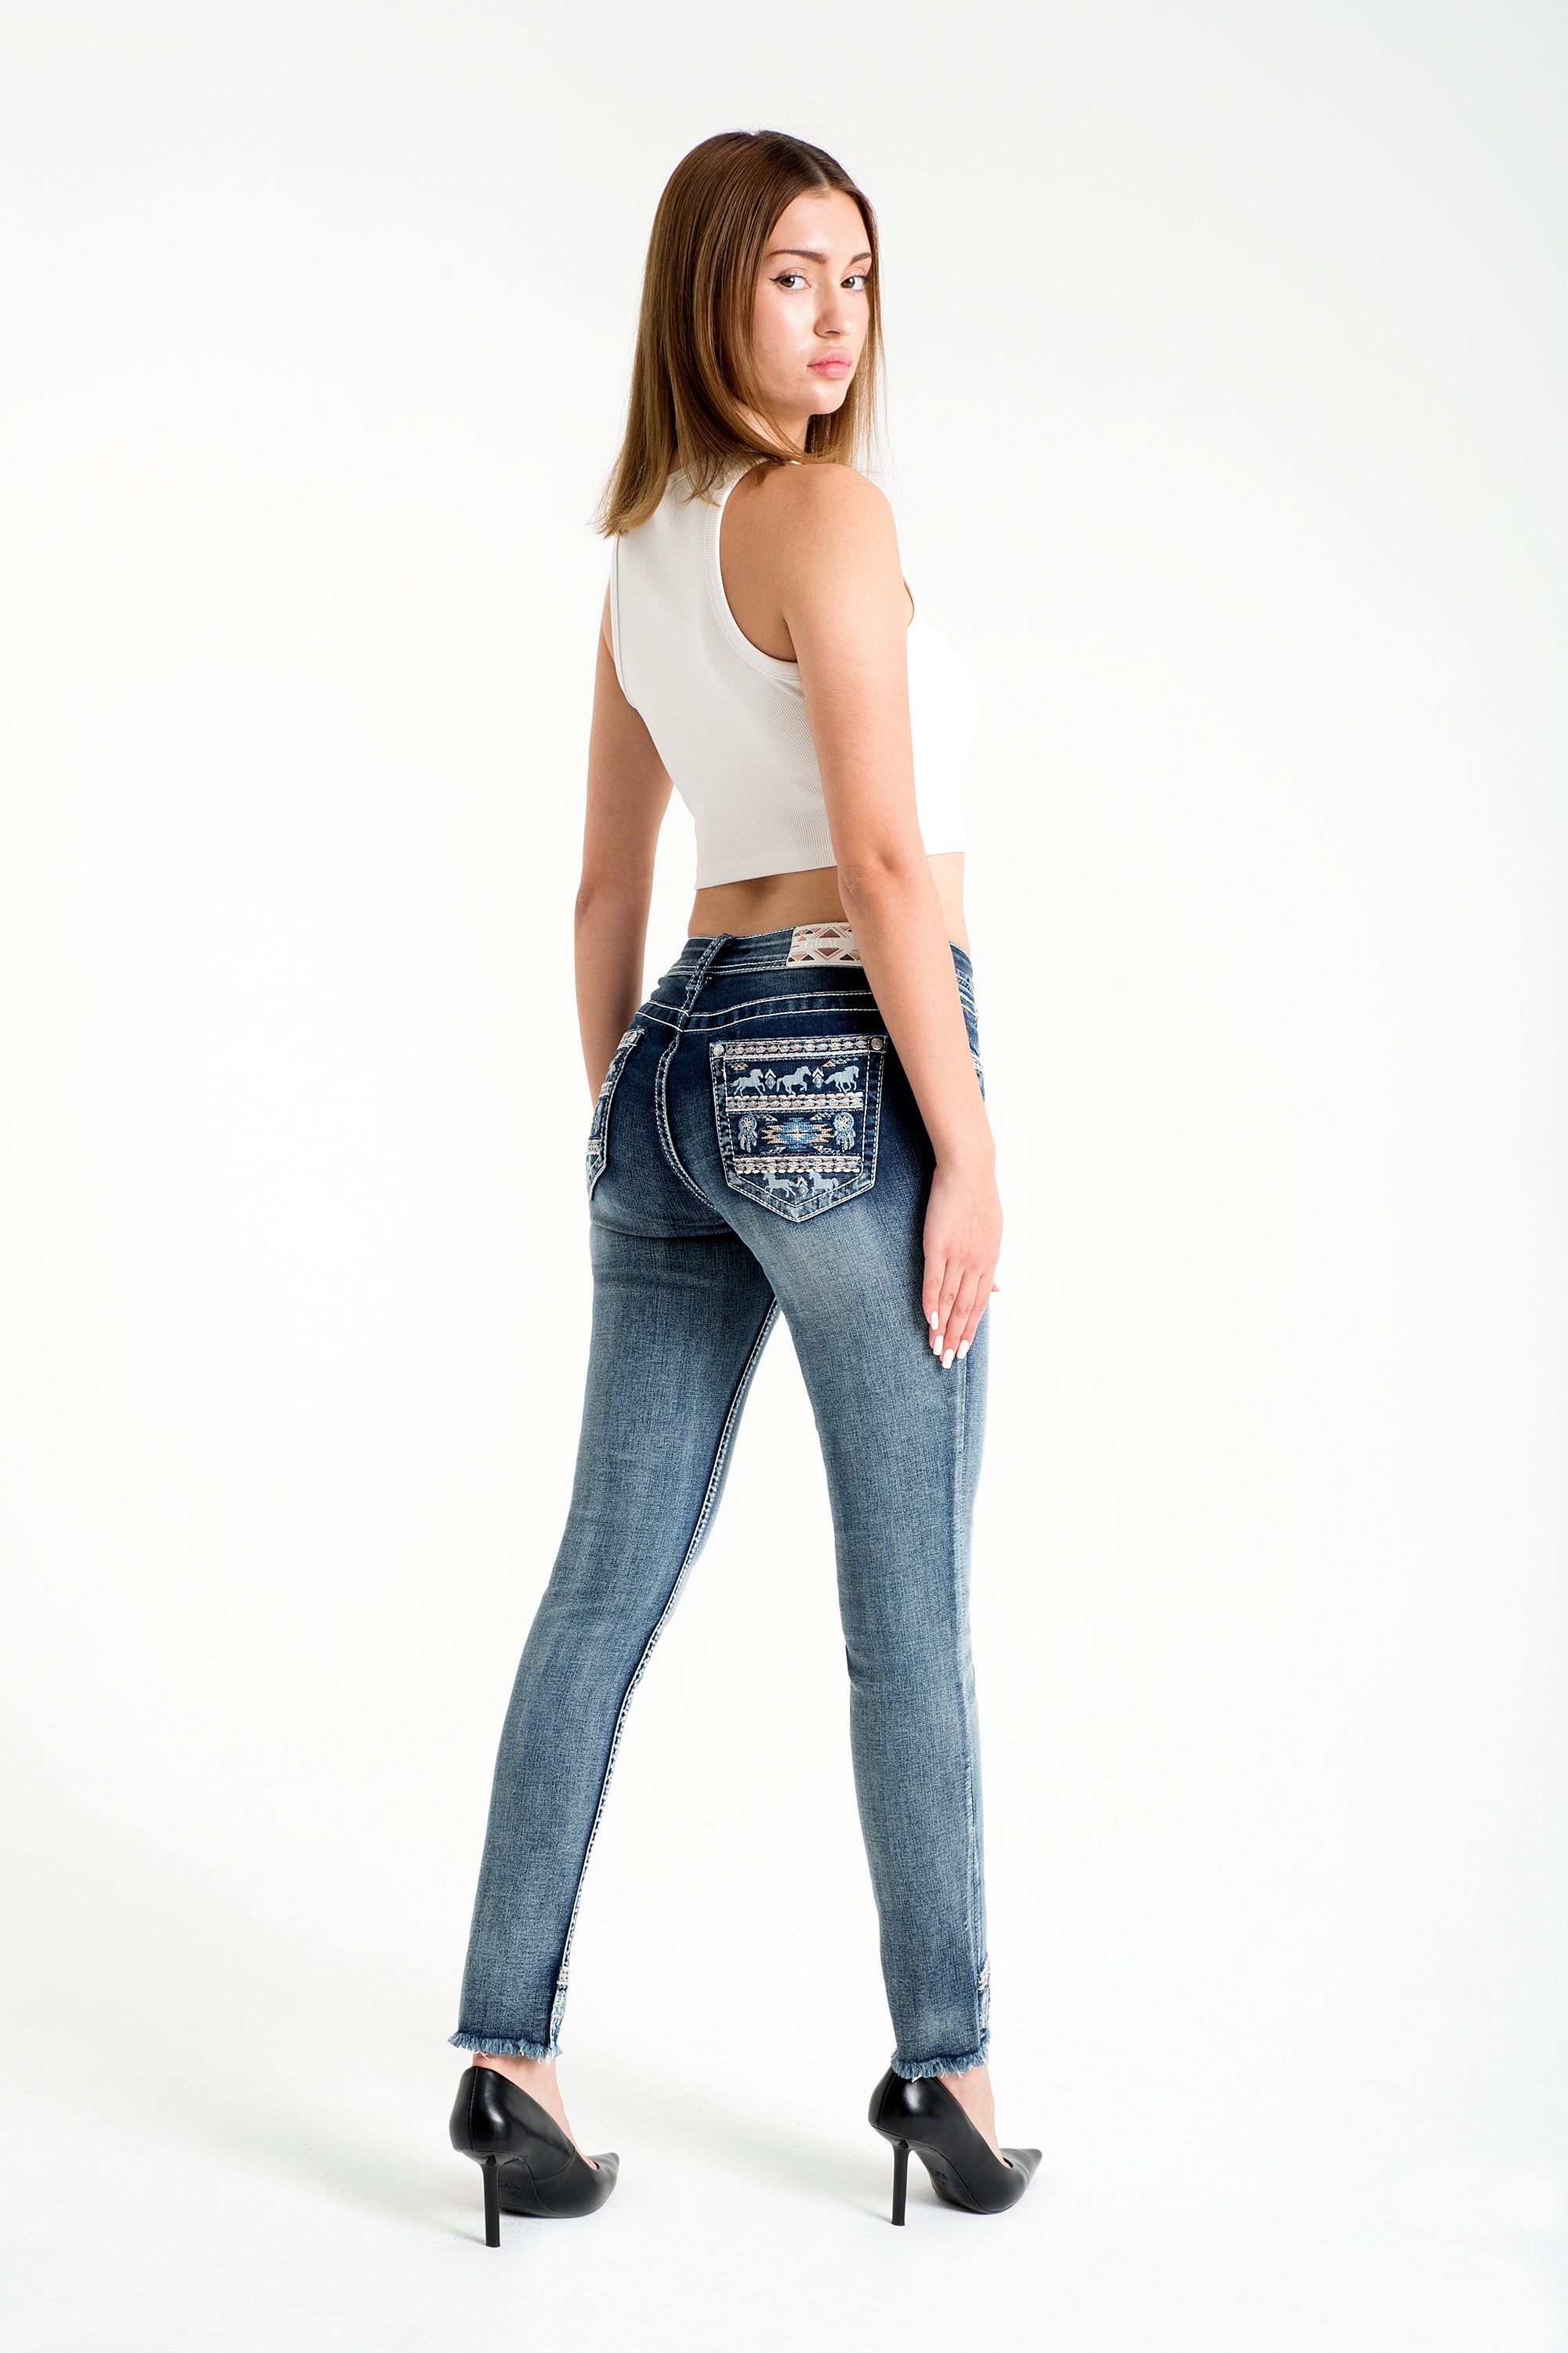 embellished-jeans-embellish-jeans-bootcut-jeans-grace-in-la